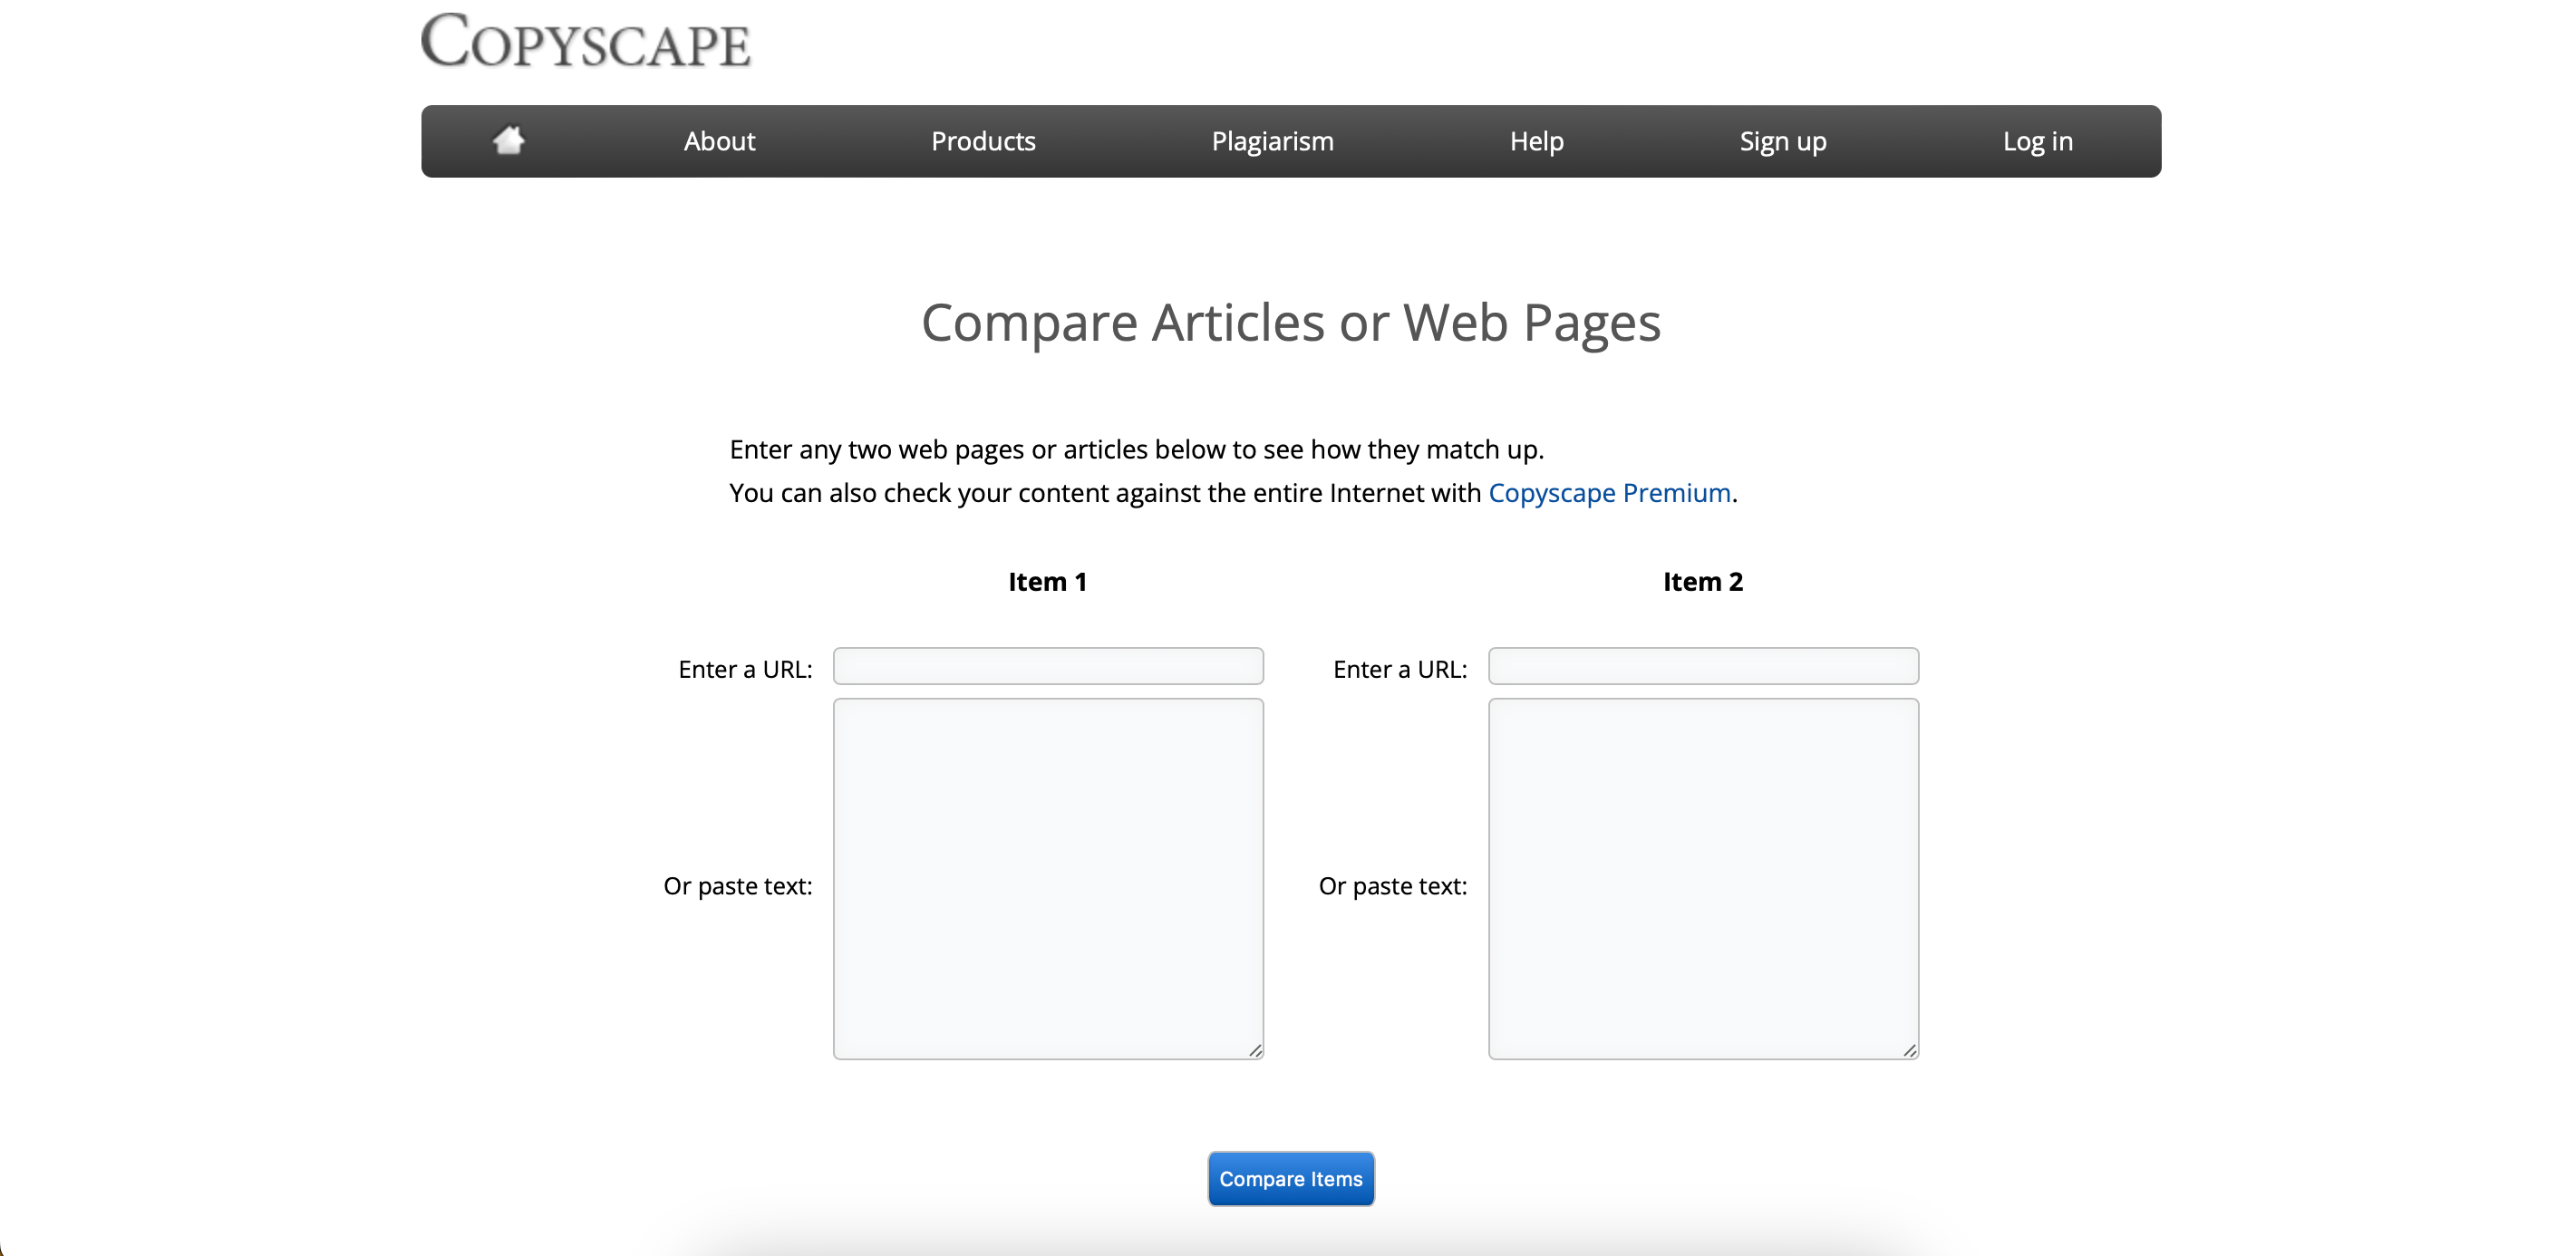 The URL comparison features in Copyscape